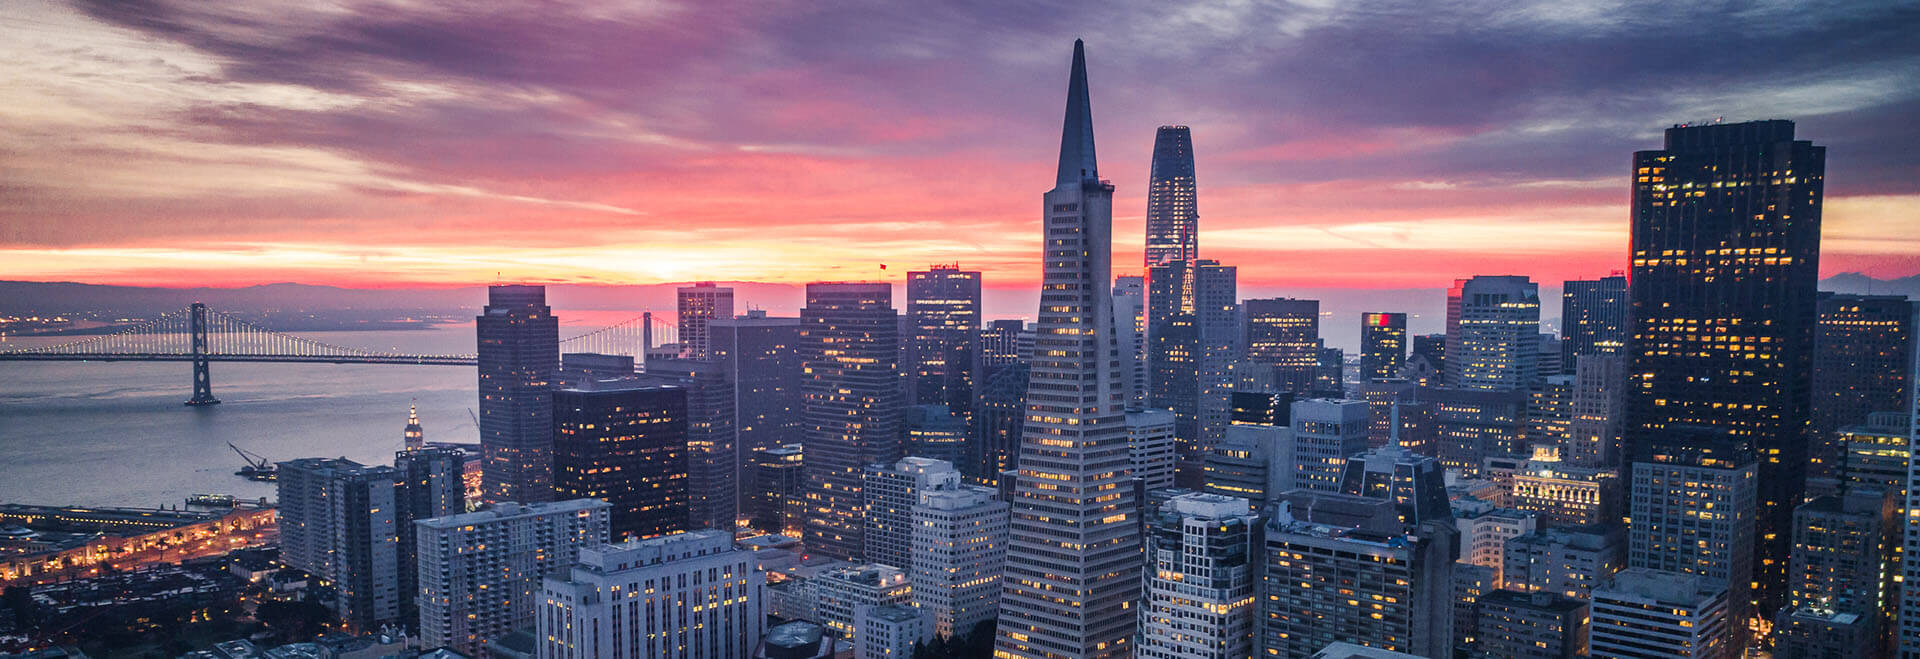 Downtown San Francisco at sunset